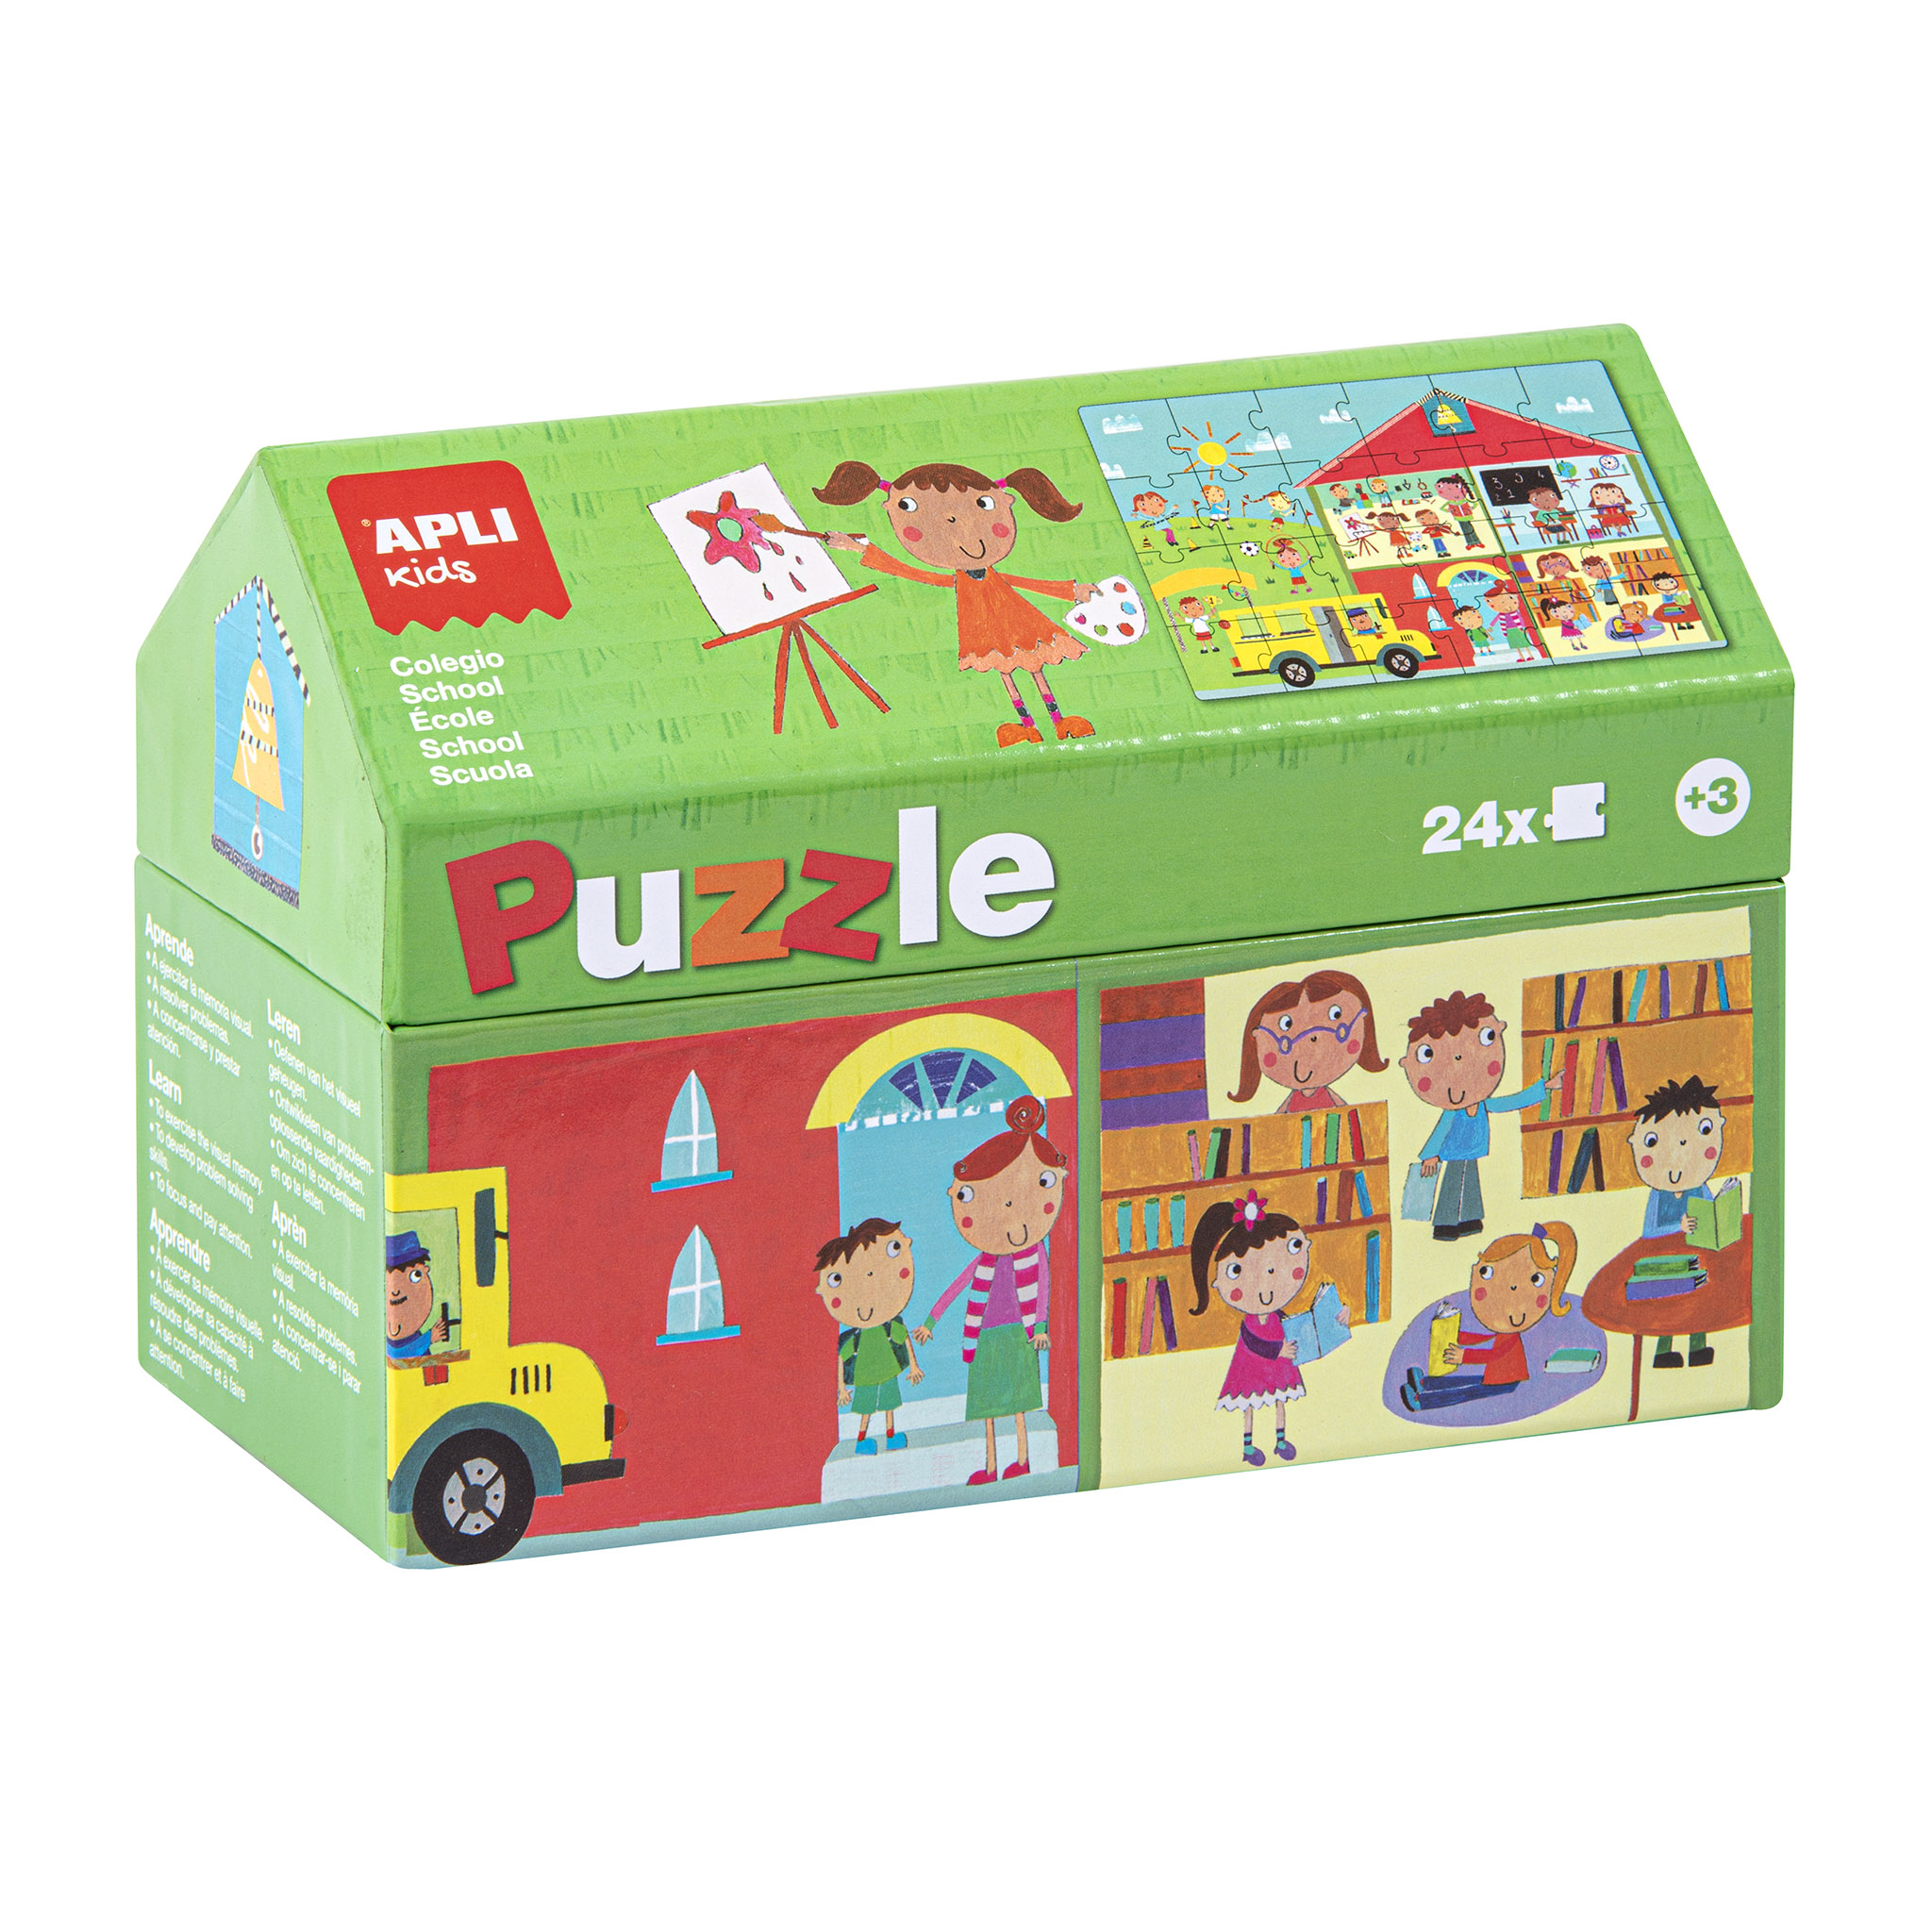 School puzzle house box (24 pieces)